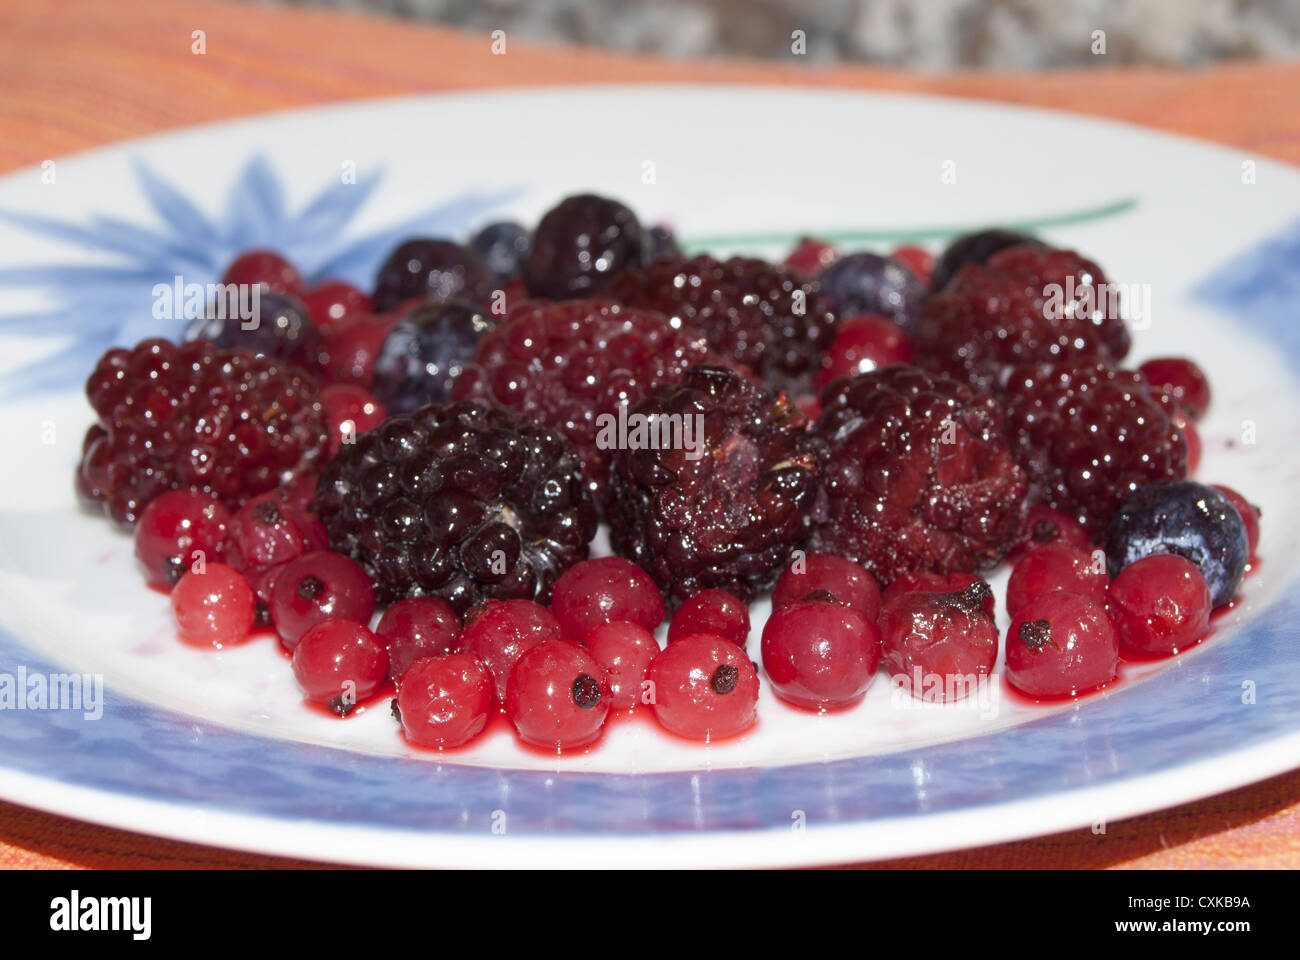 composition of berries: blackberries, blueberries, raspberries Stock Photo